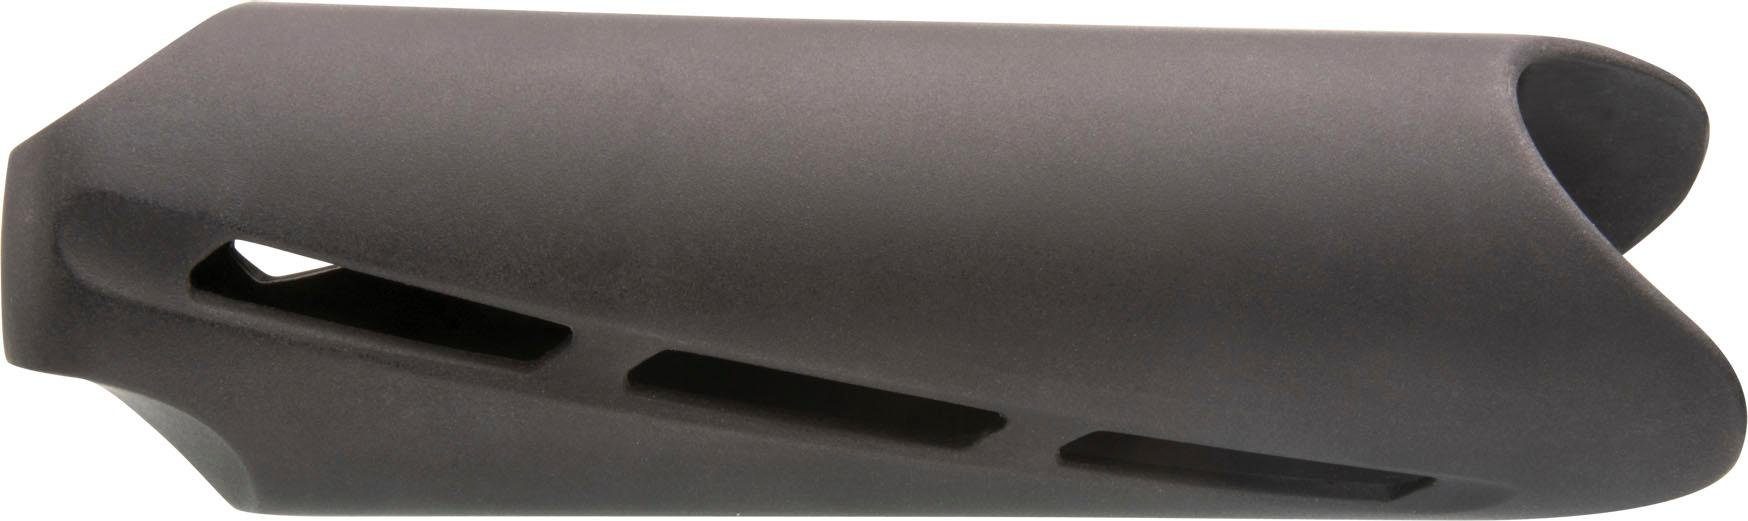 S6606 Straight & Confidence Curl Glätteisen Haarglätter Remington Keramik-Turmalin-Beschichtung